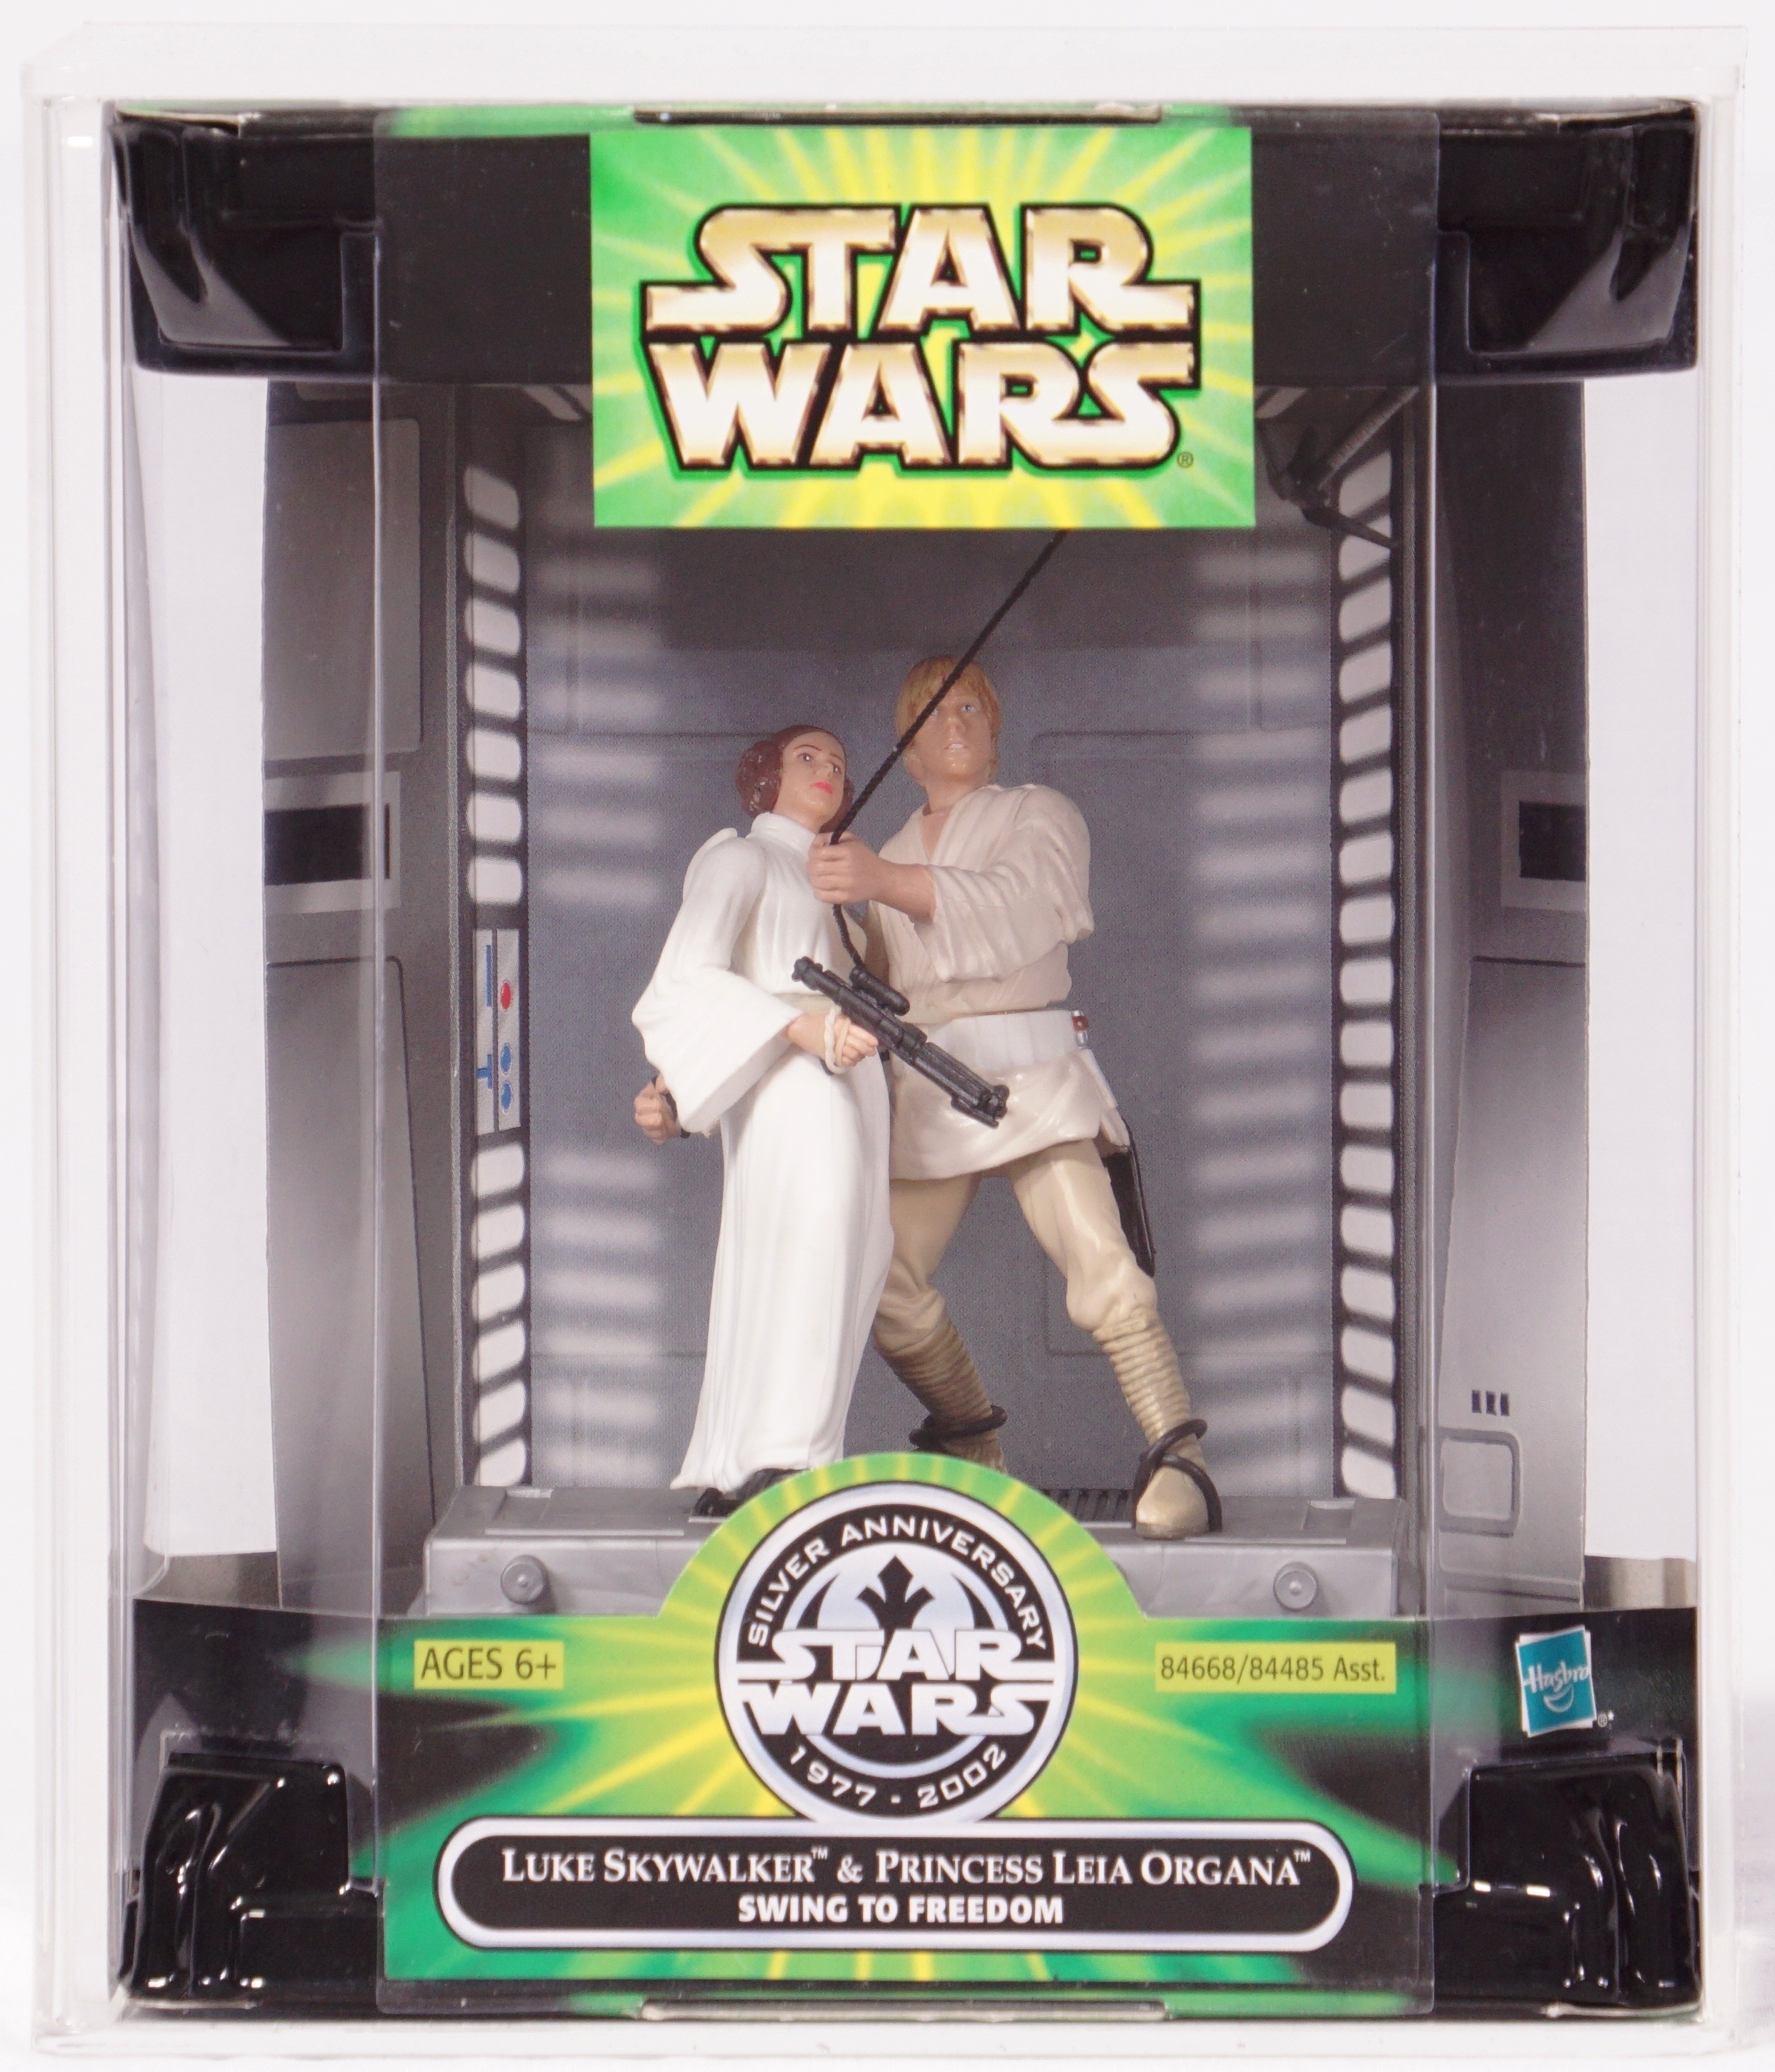 2002 Star Wars Hasbro Boxed Action Figure - Luke Skywalker & Princess Leia  Organa (25th Anniversary Swing to Freedom)